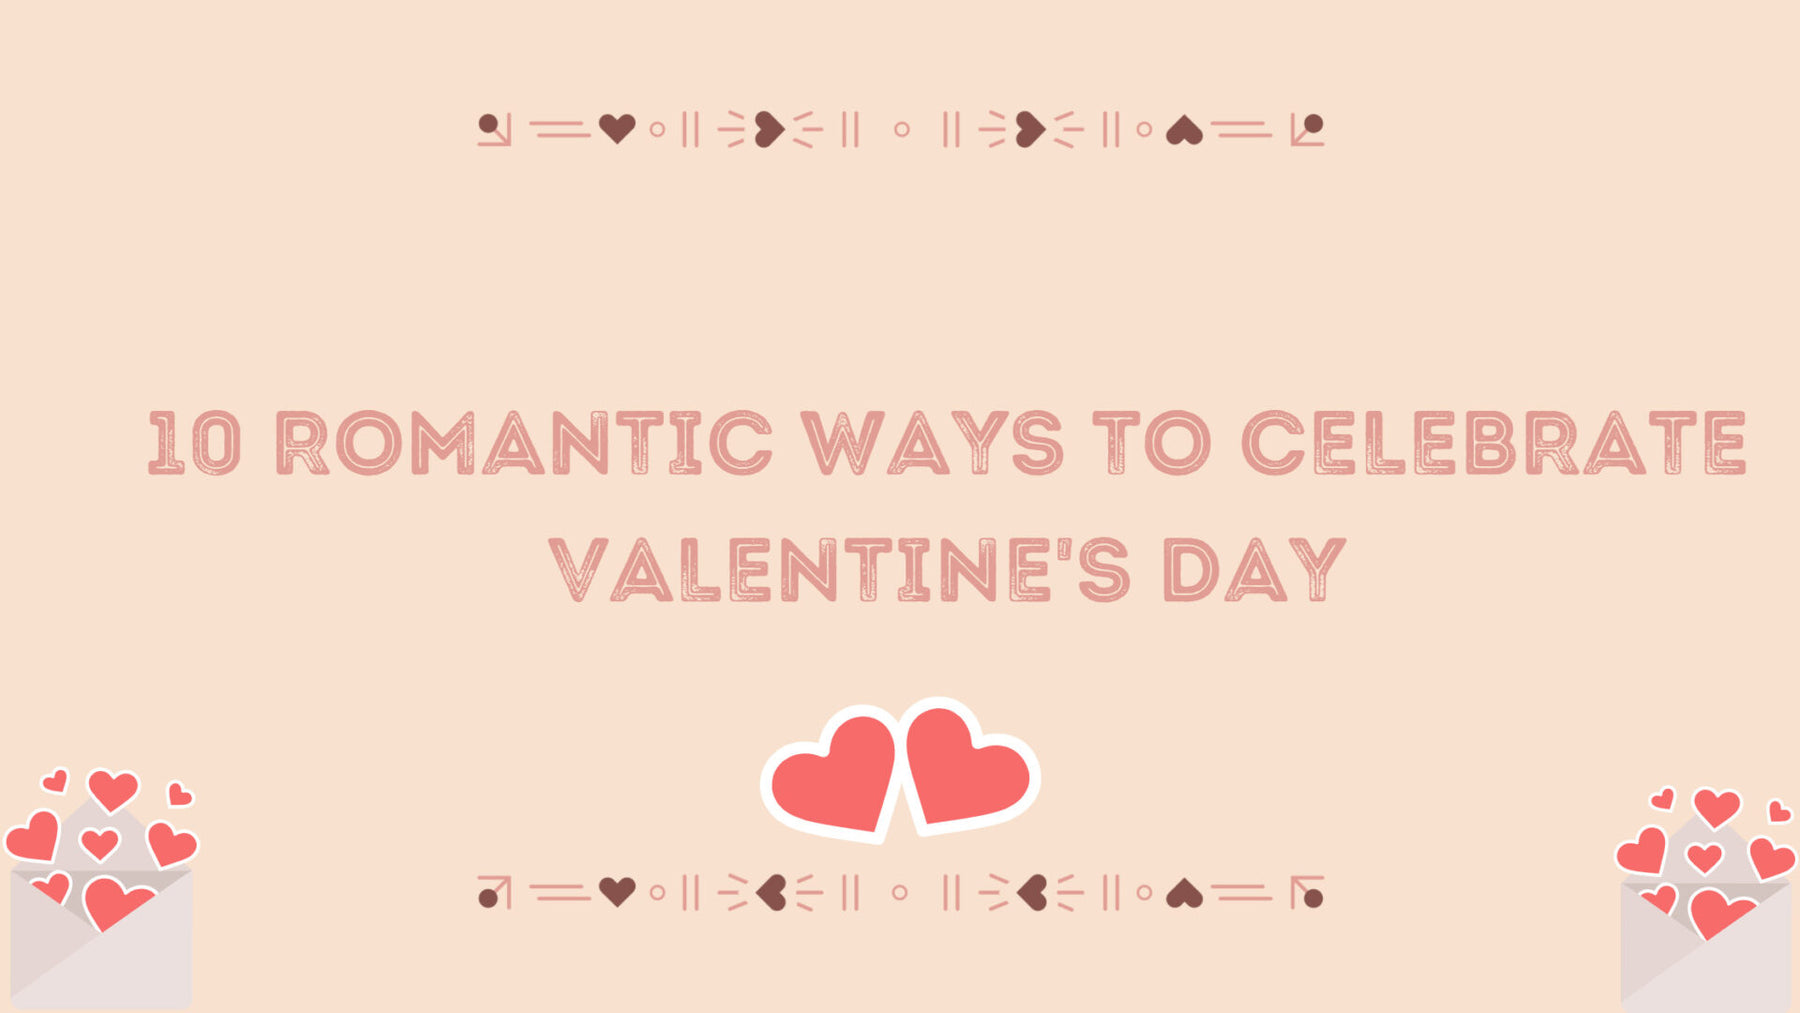 10 Romantic Ways to Celebrate Valentine’s Day